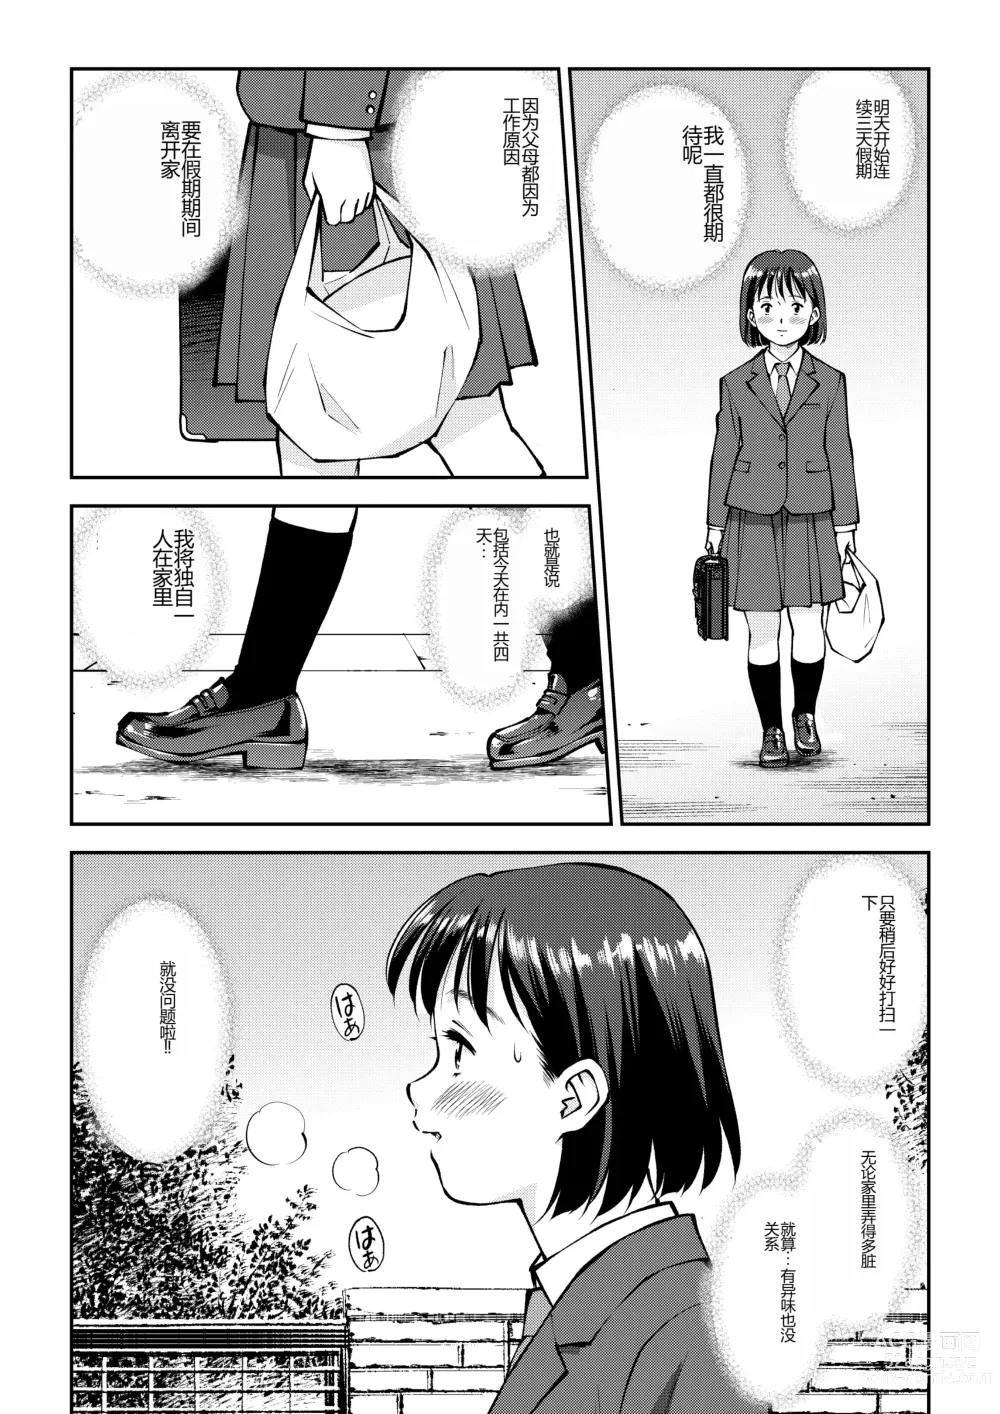 Page 3 of manga Unko Mamire de Orusuban